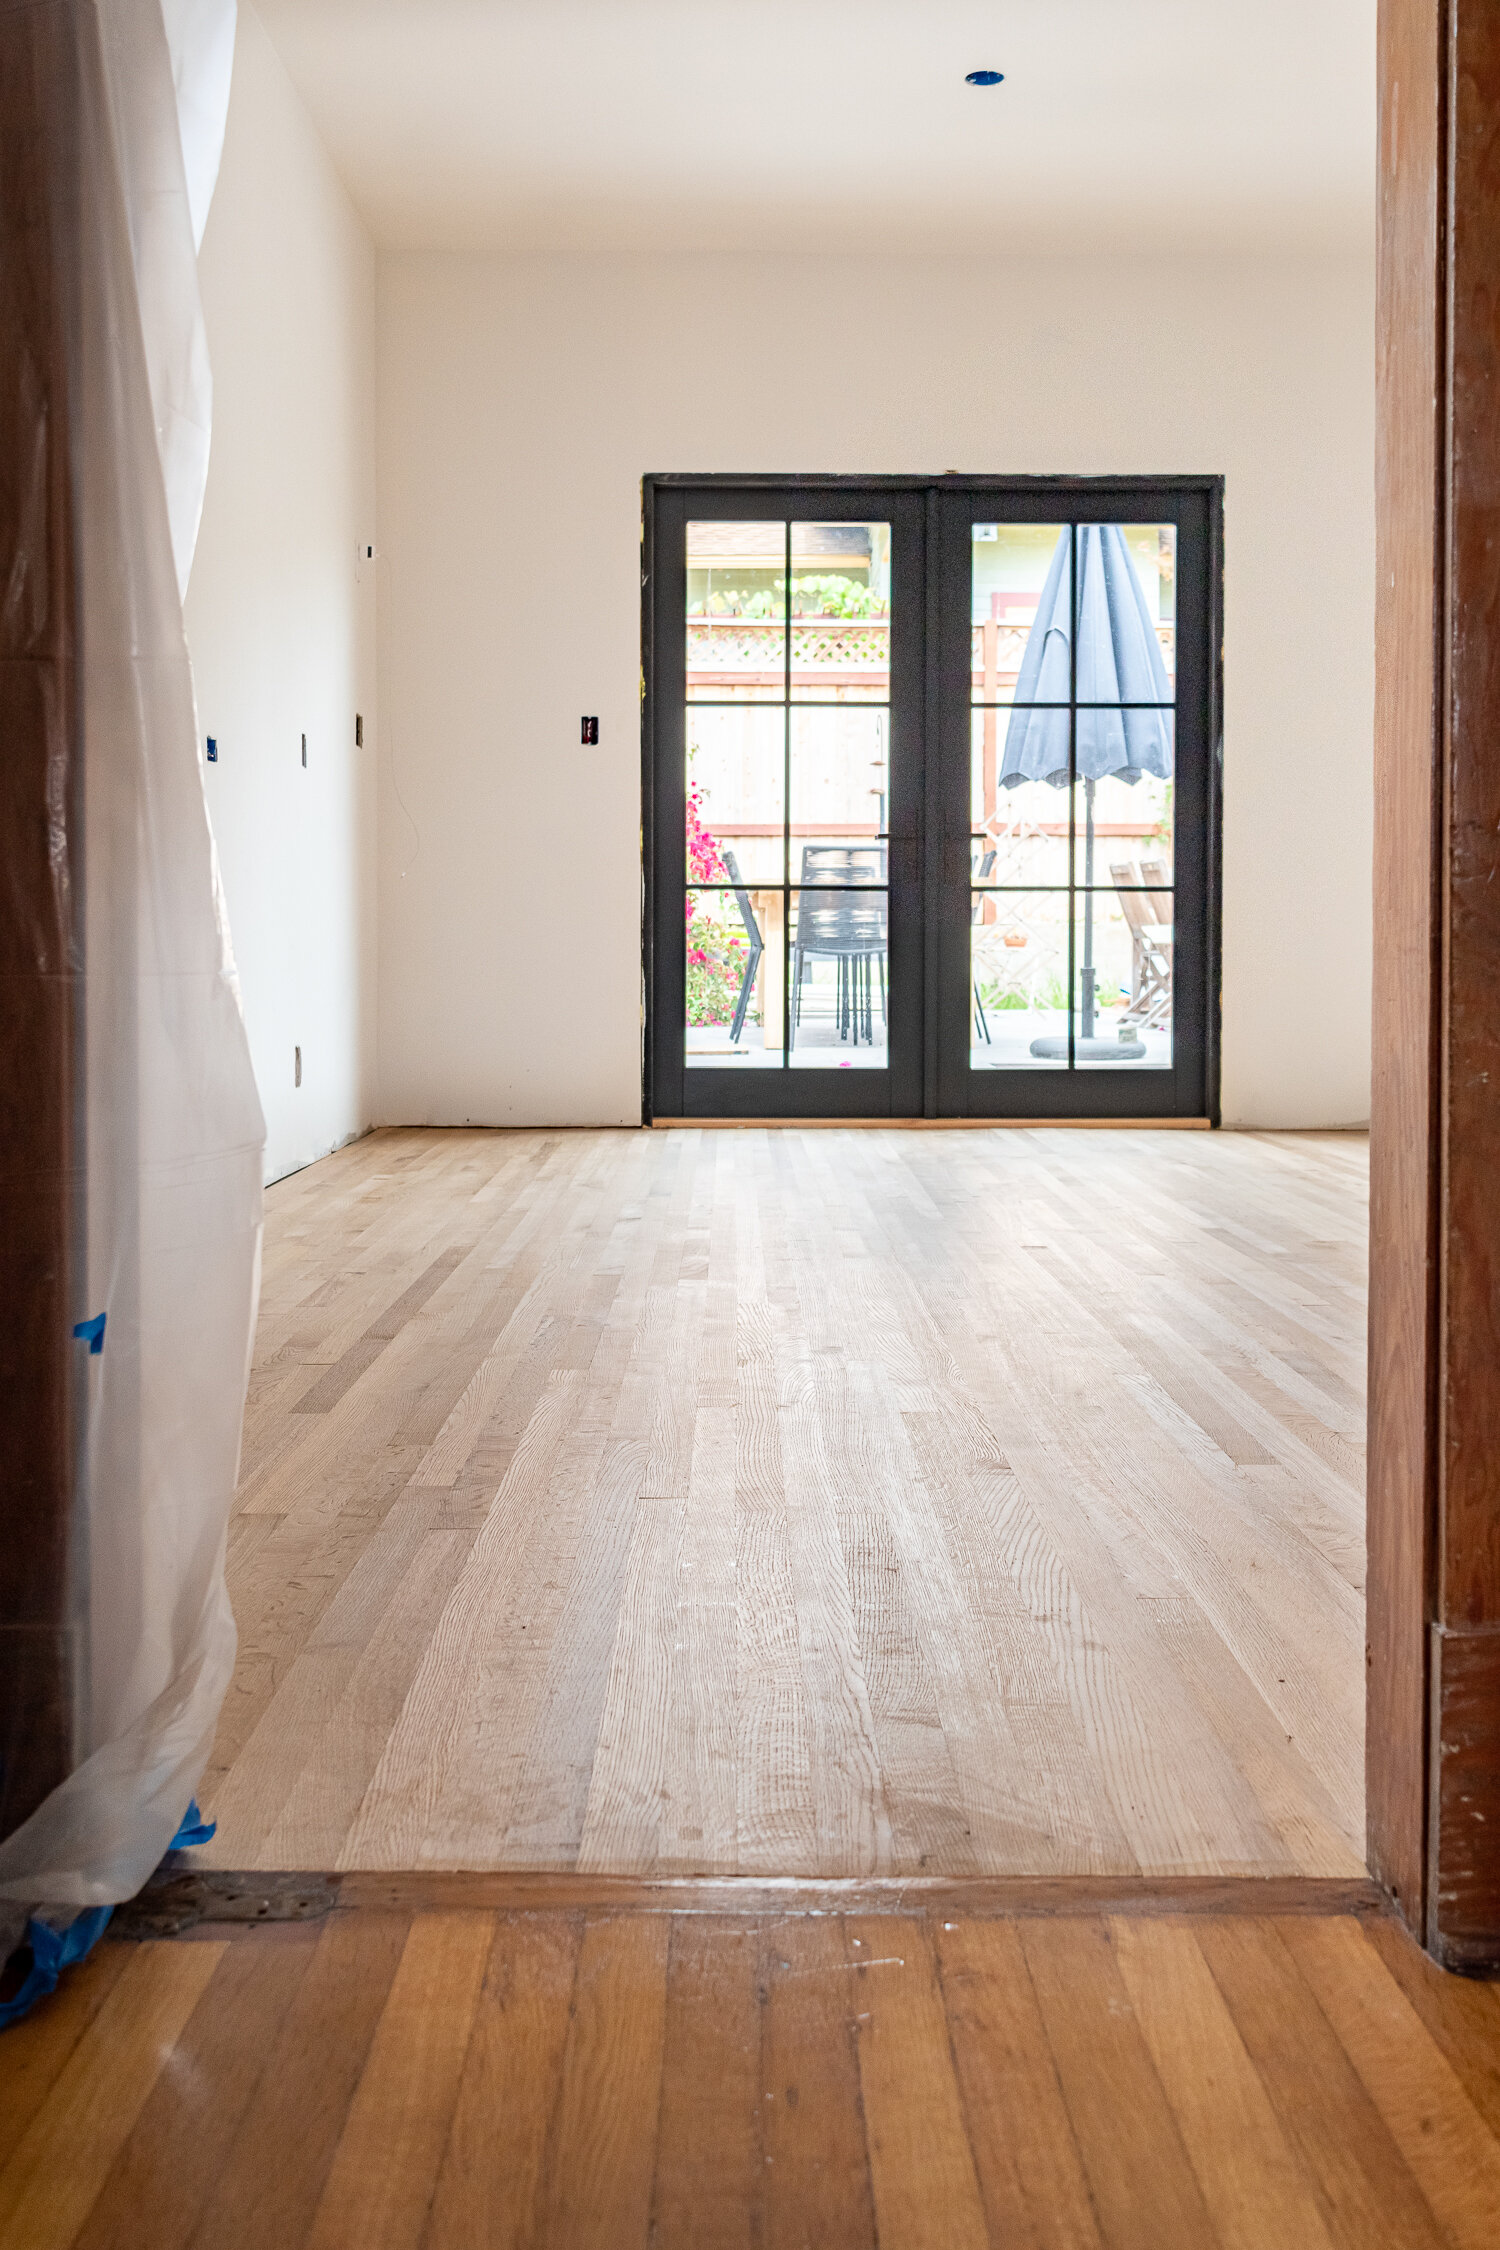 Installing New Hardwood Floors In Our, Install Hardwood Floor Picture Frame